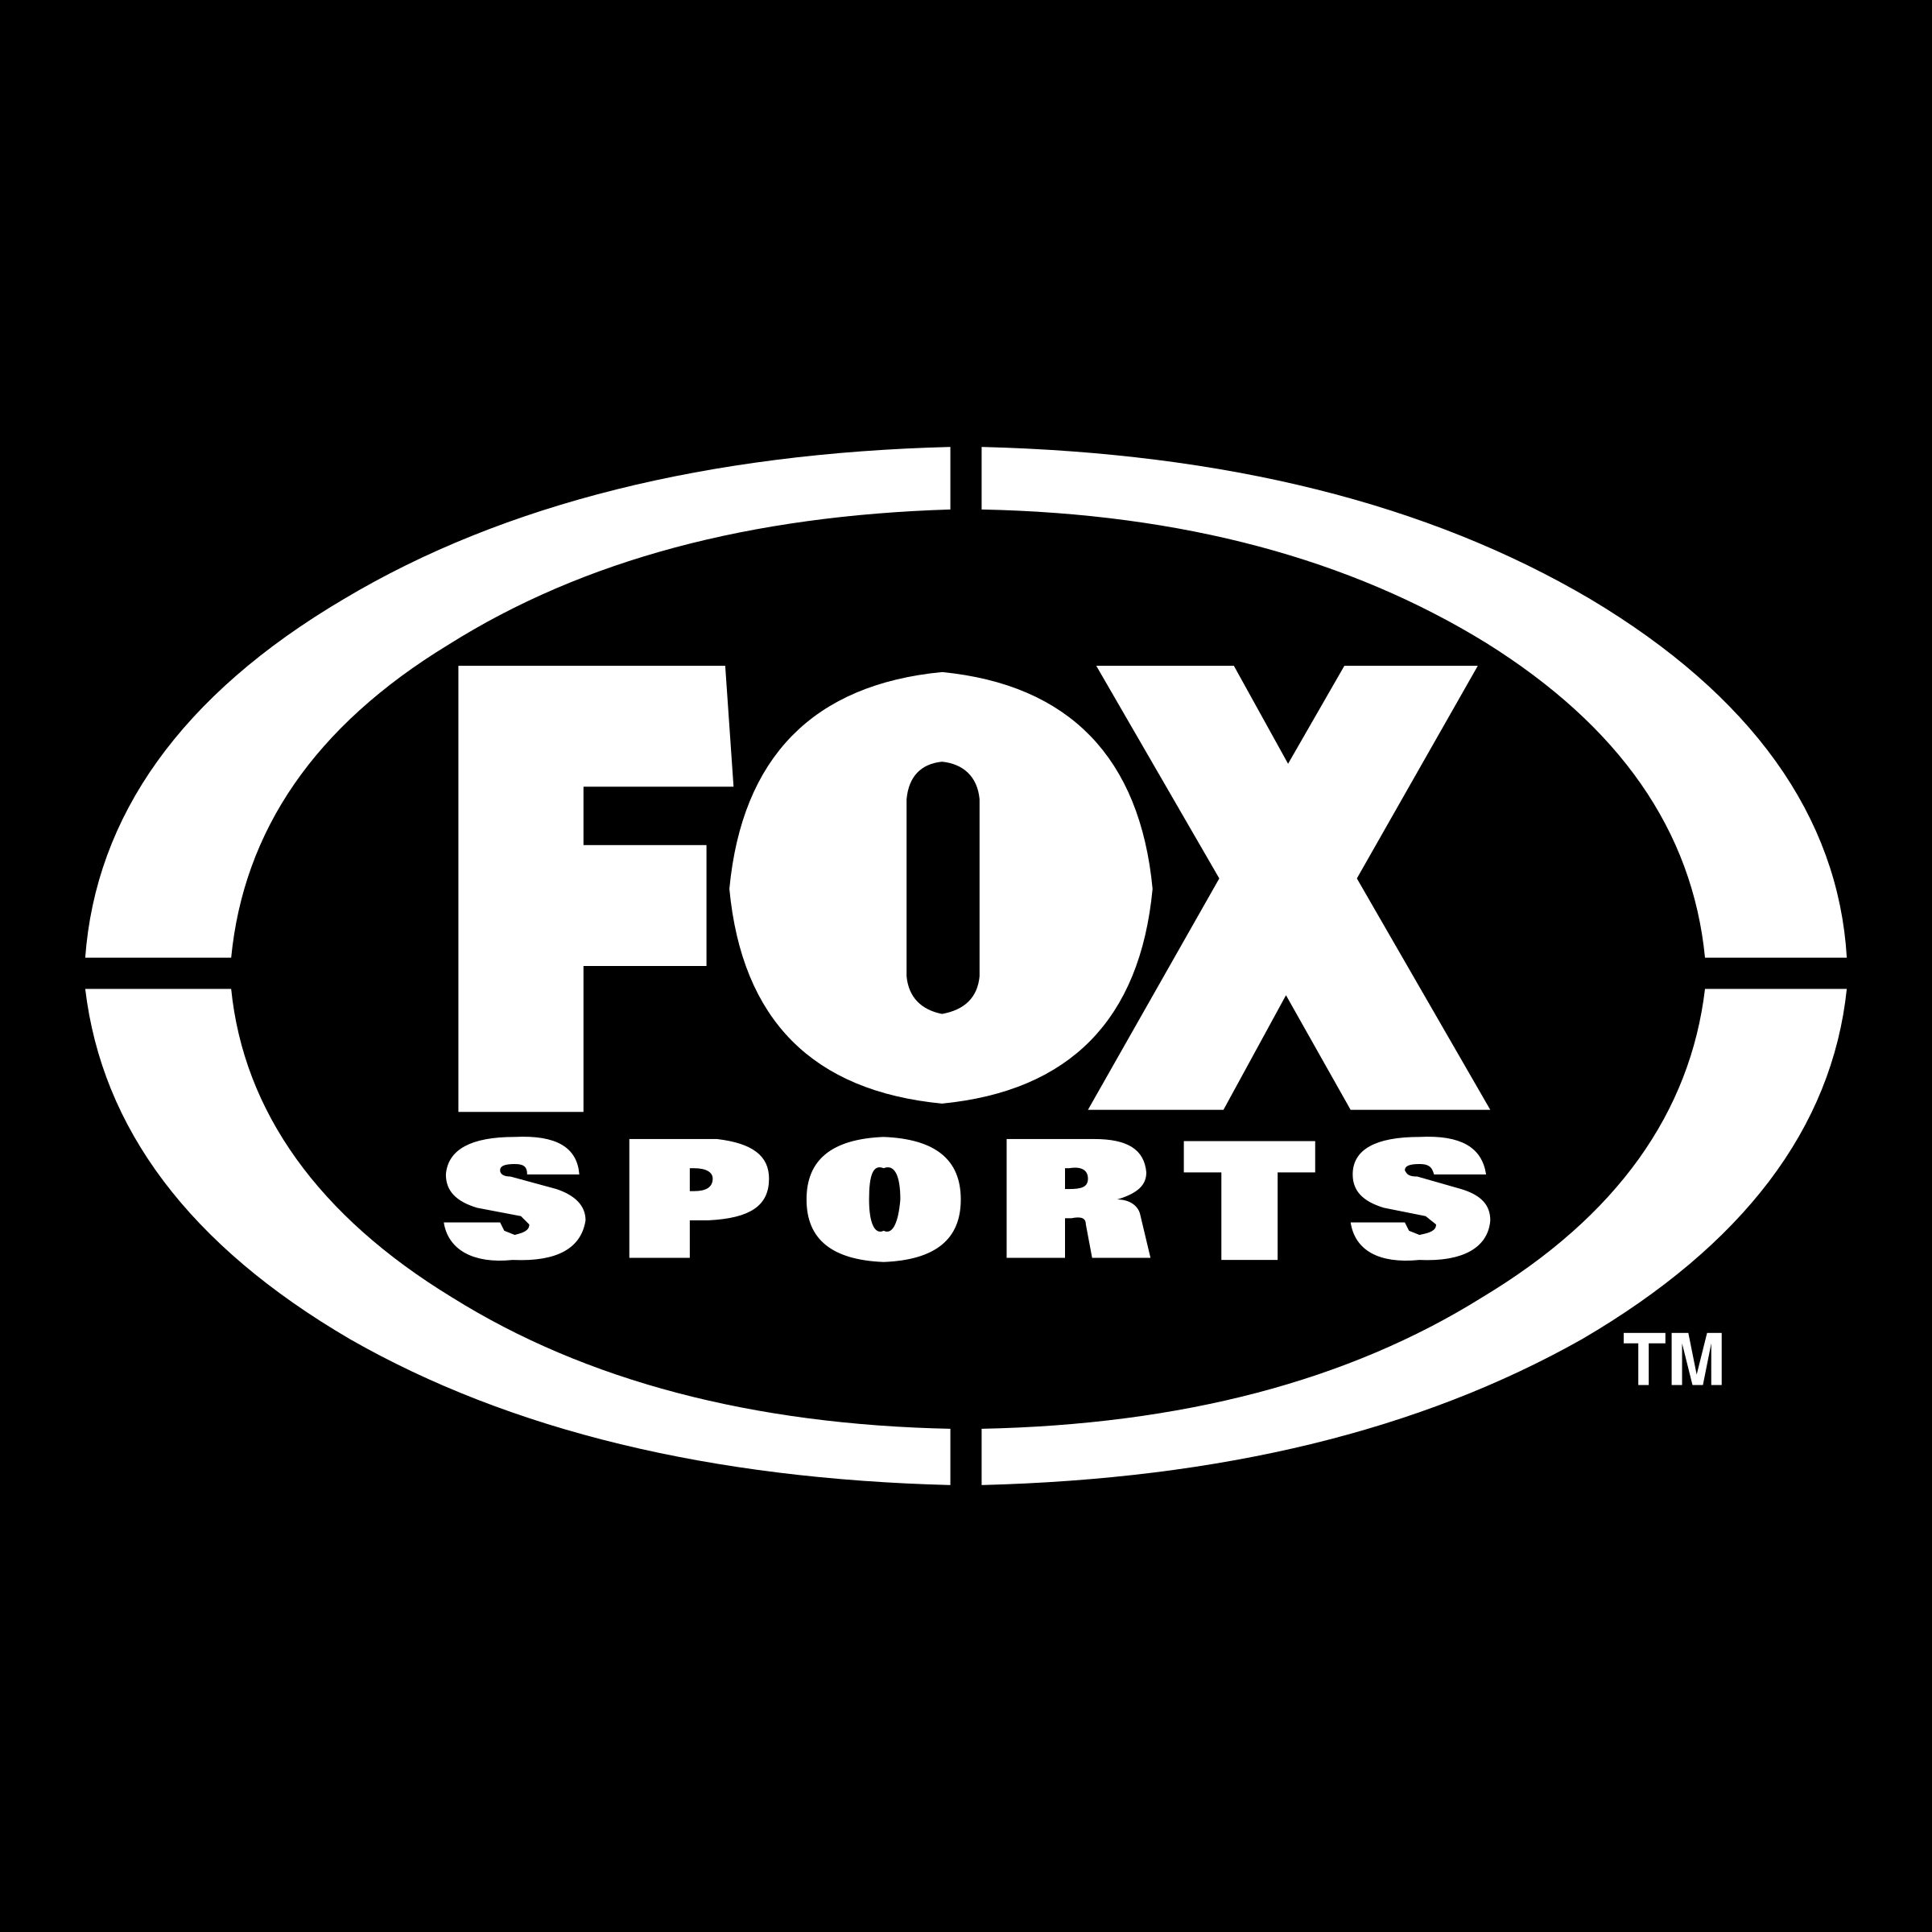 Black Sports Logo - Fox Sports Logo PNG Transparent & SVG Vector - Freebie Supply